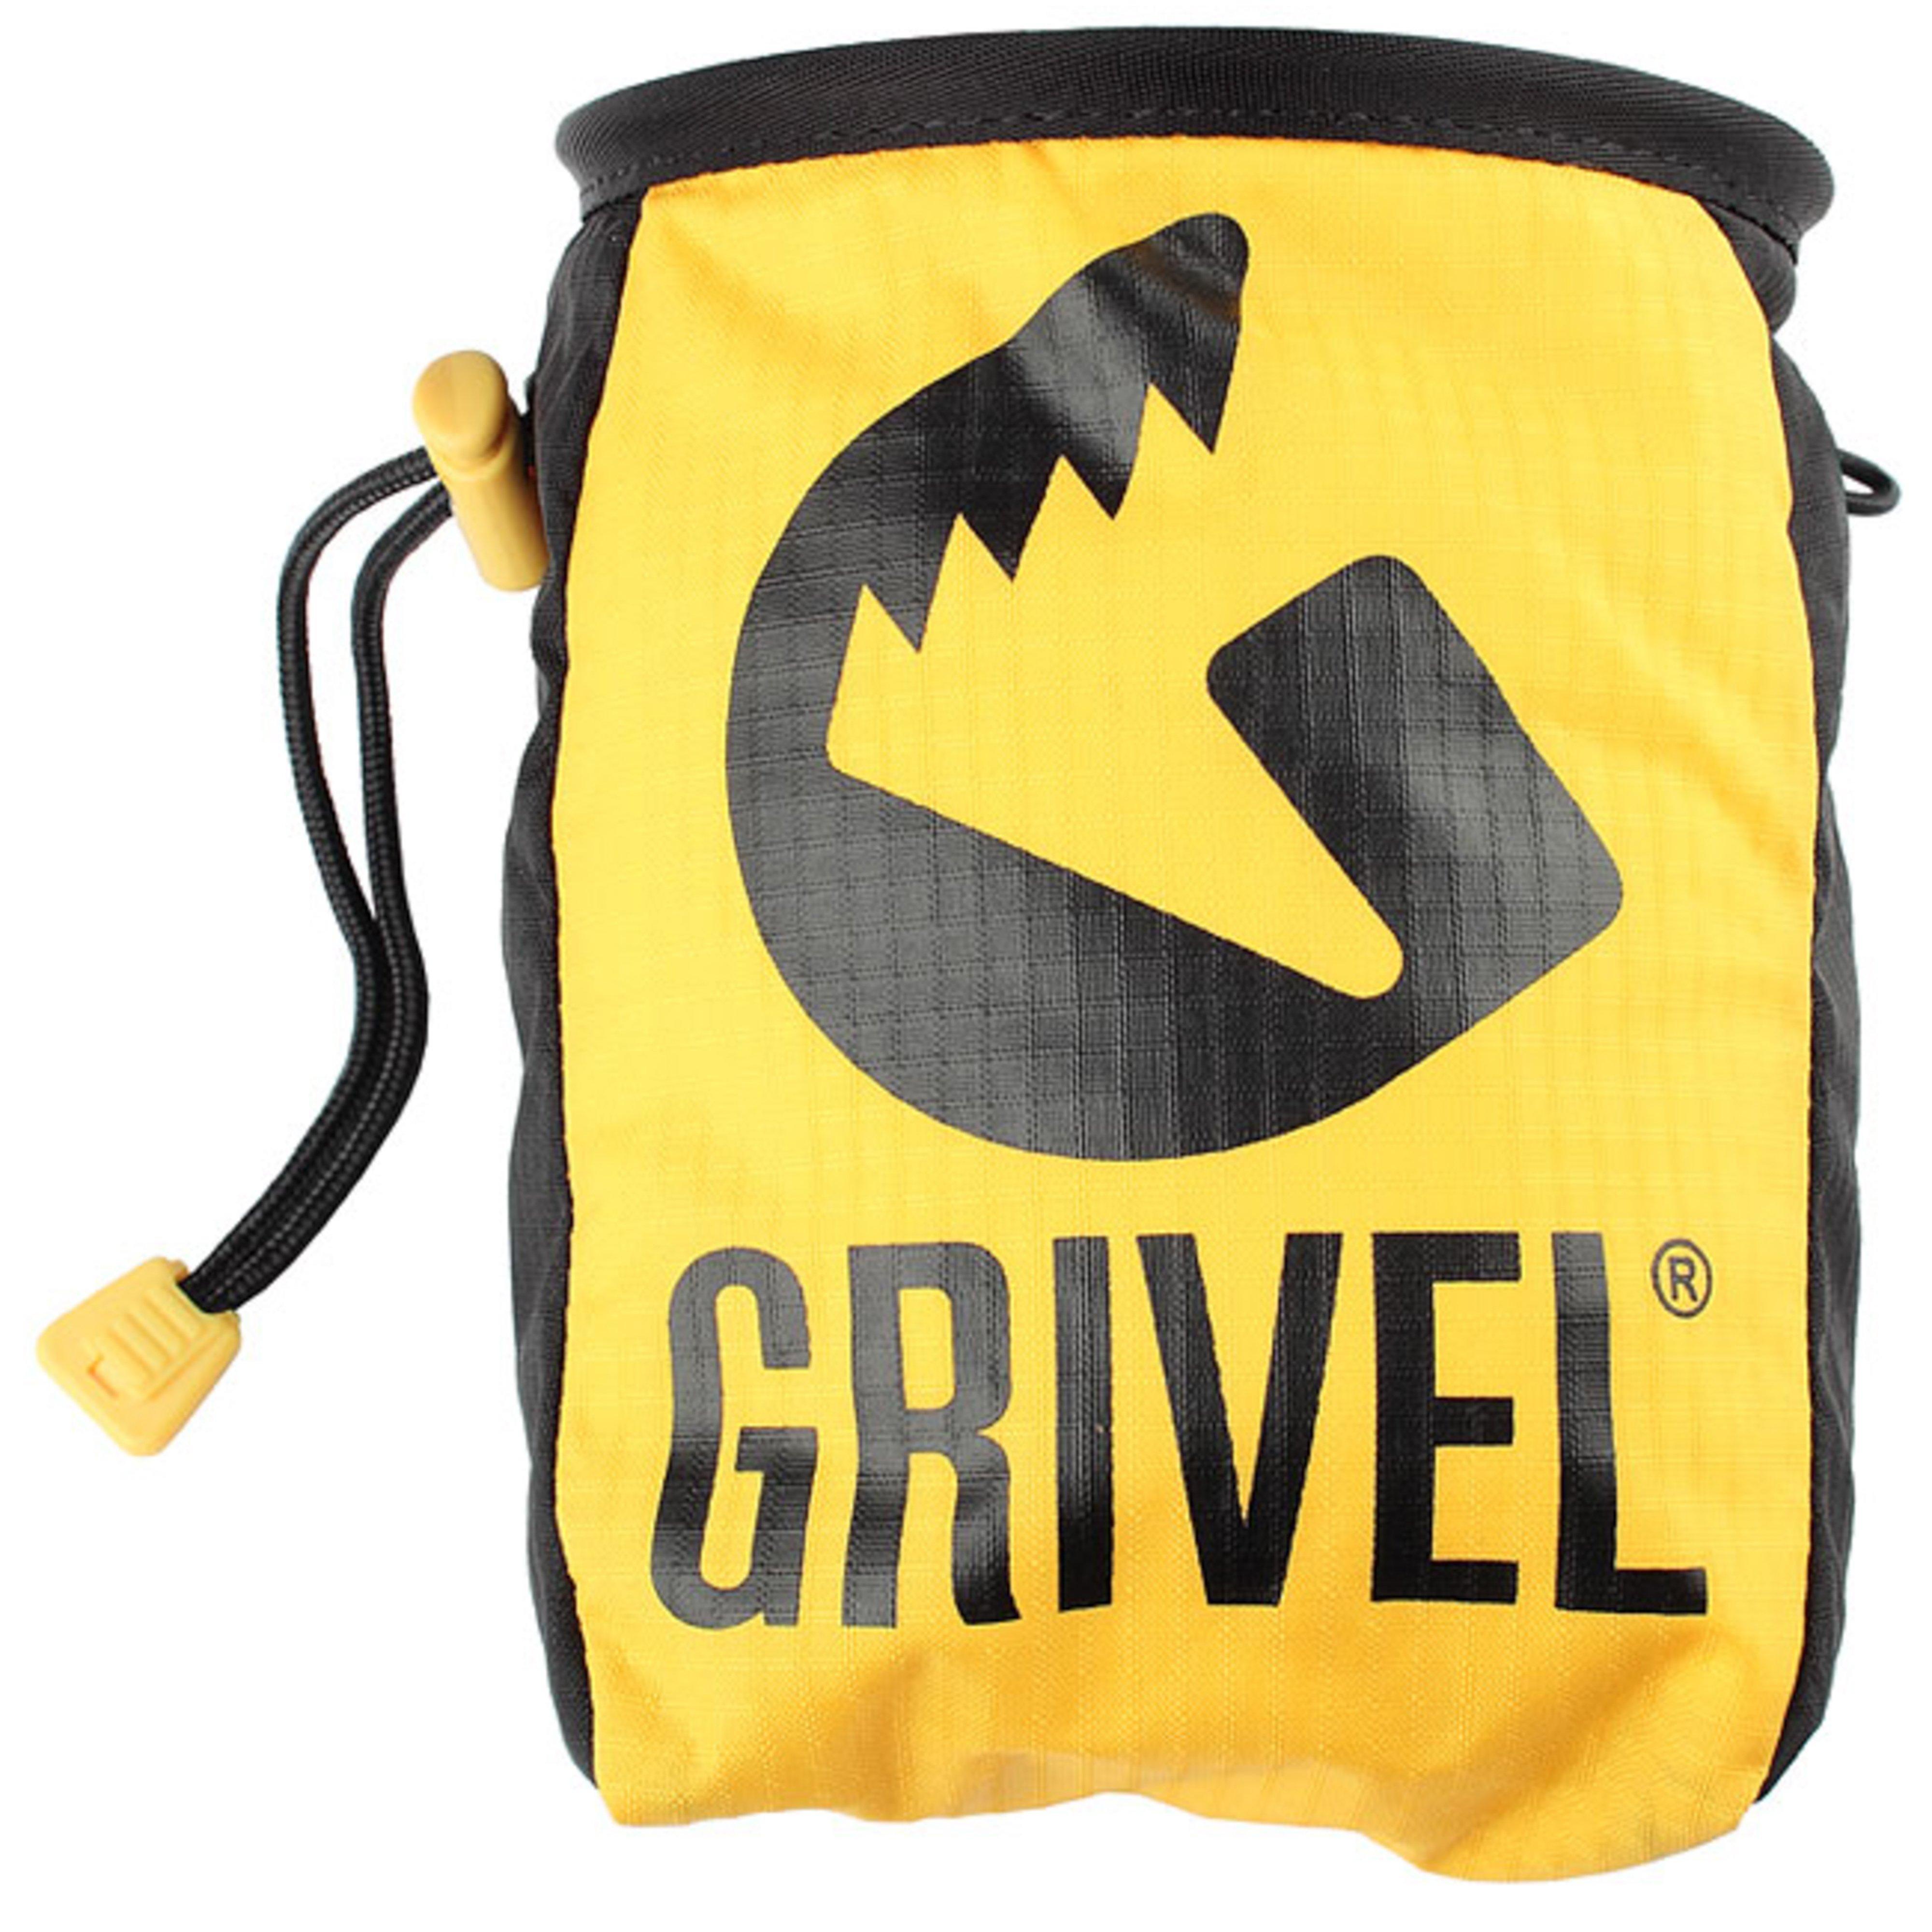 Grivel Chalk Bag Review